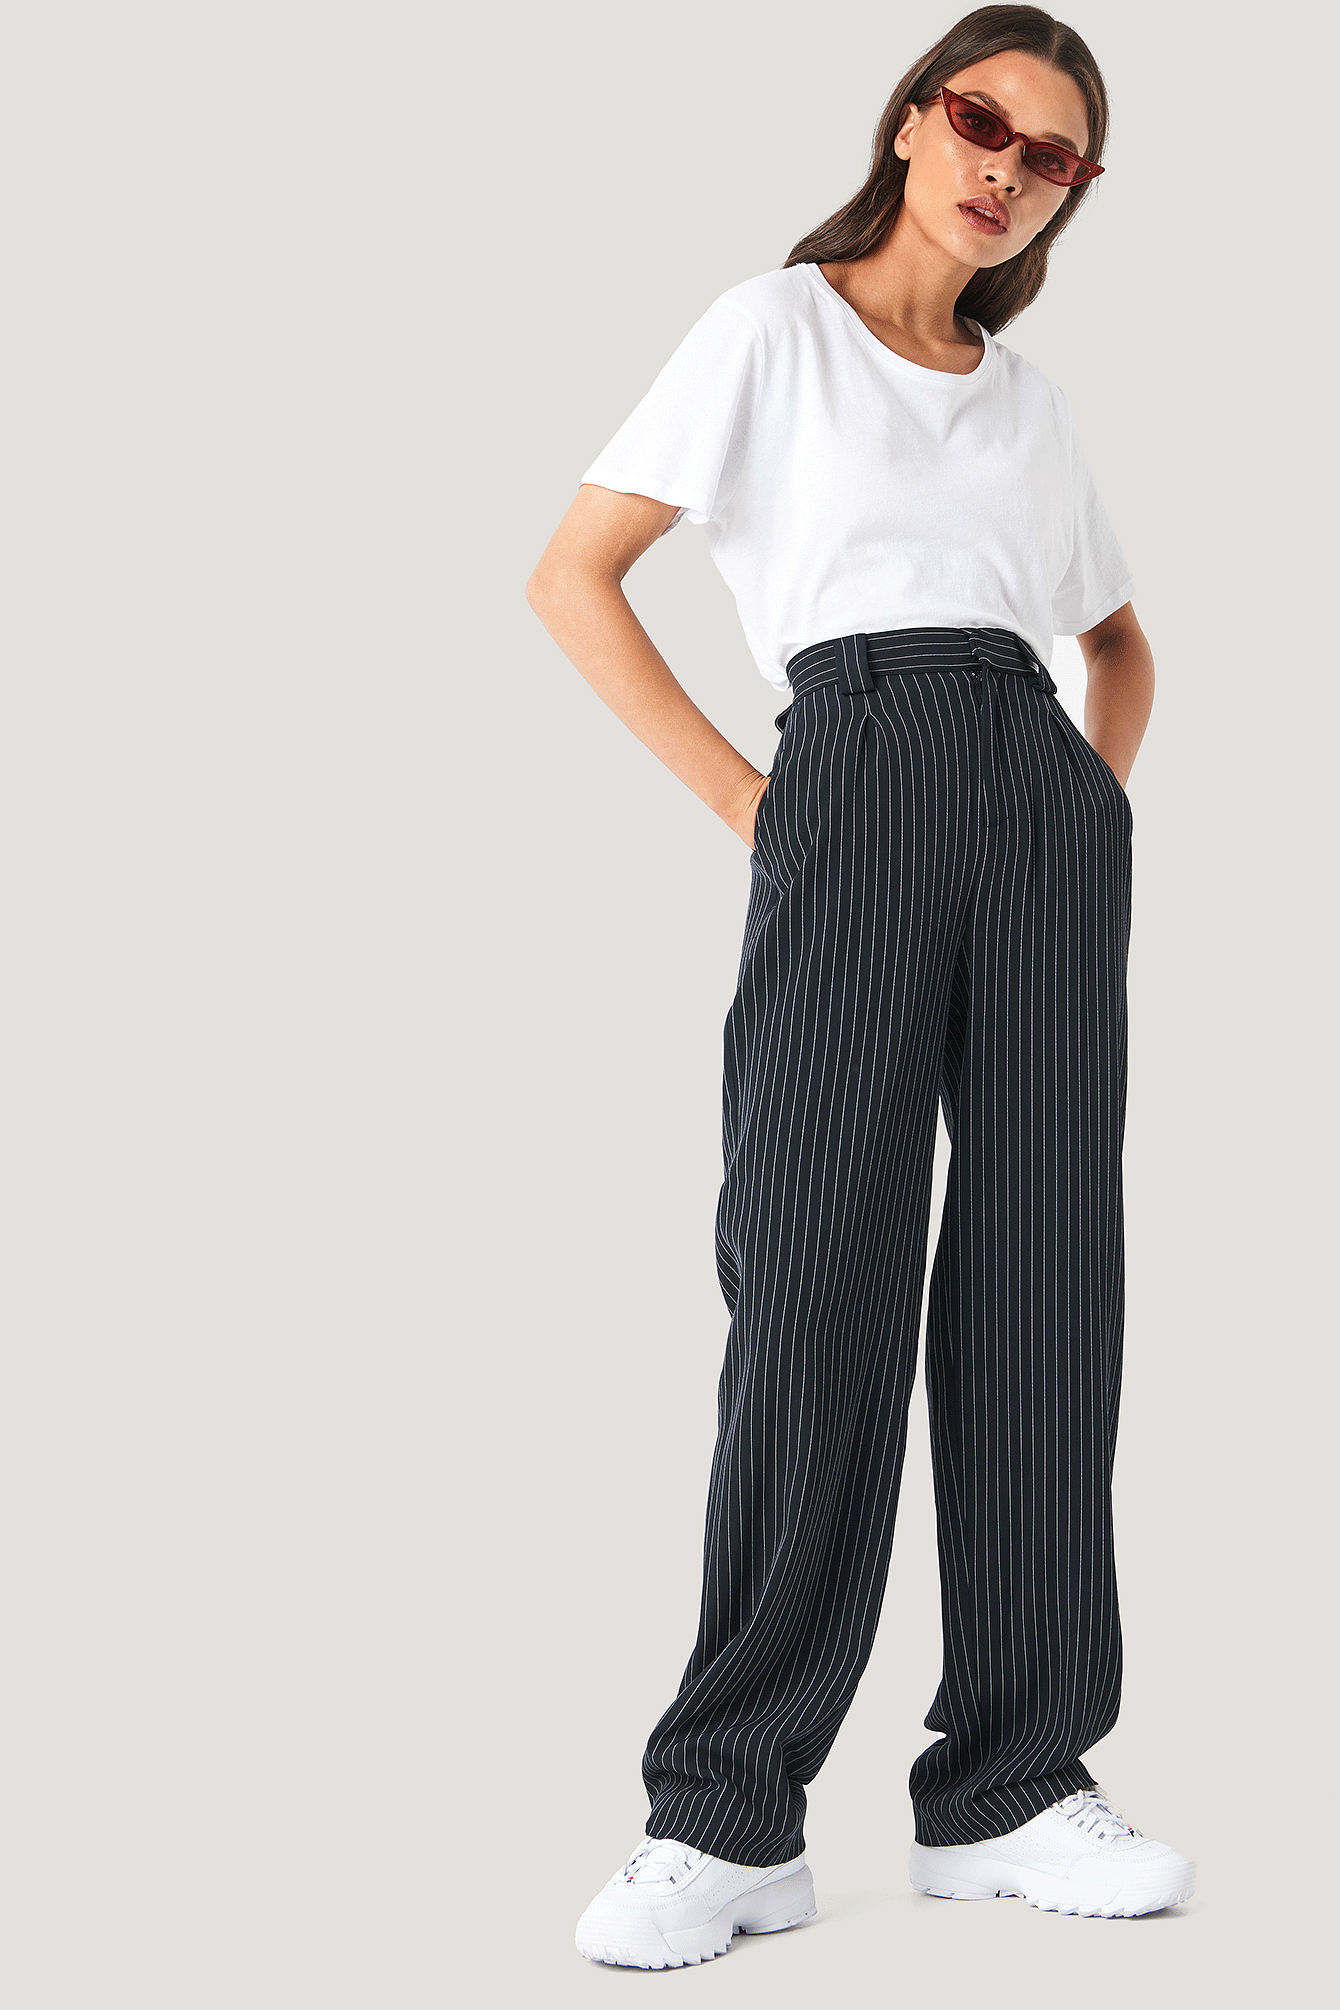 Black/Stripe Flared Striped Pants